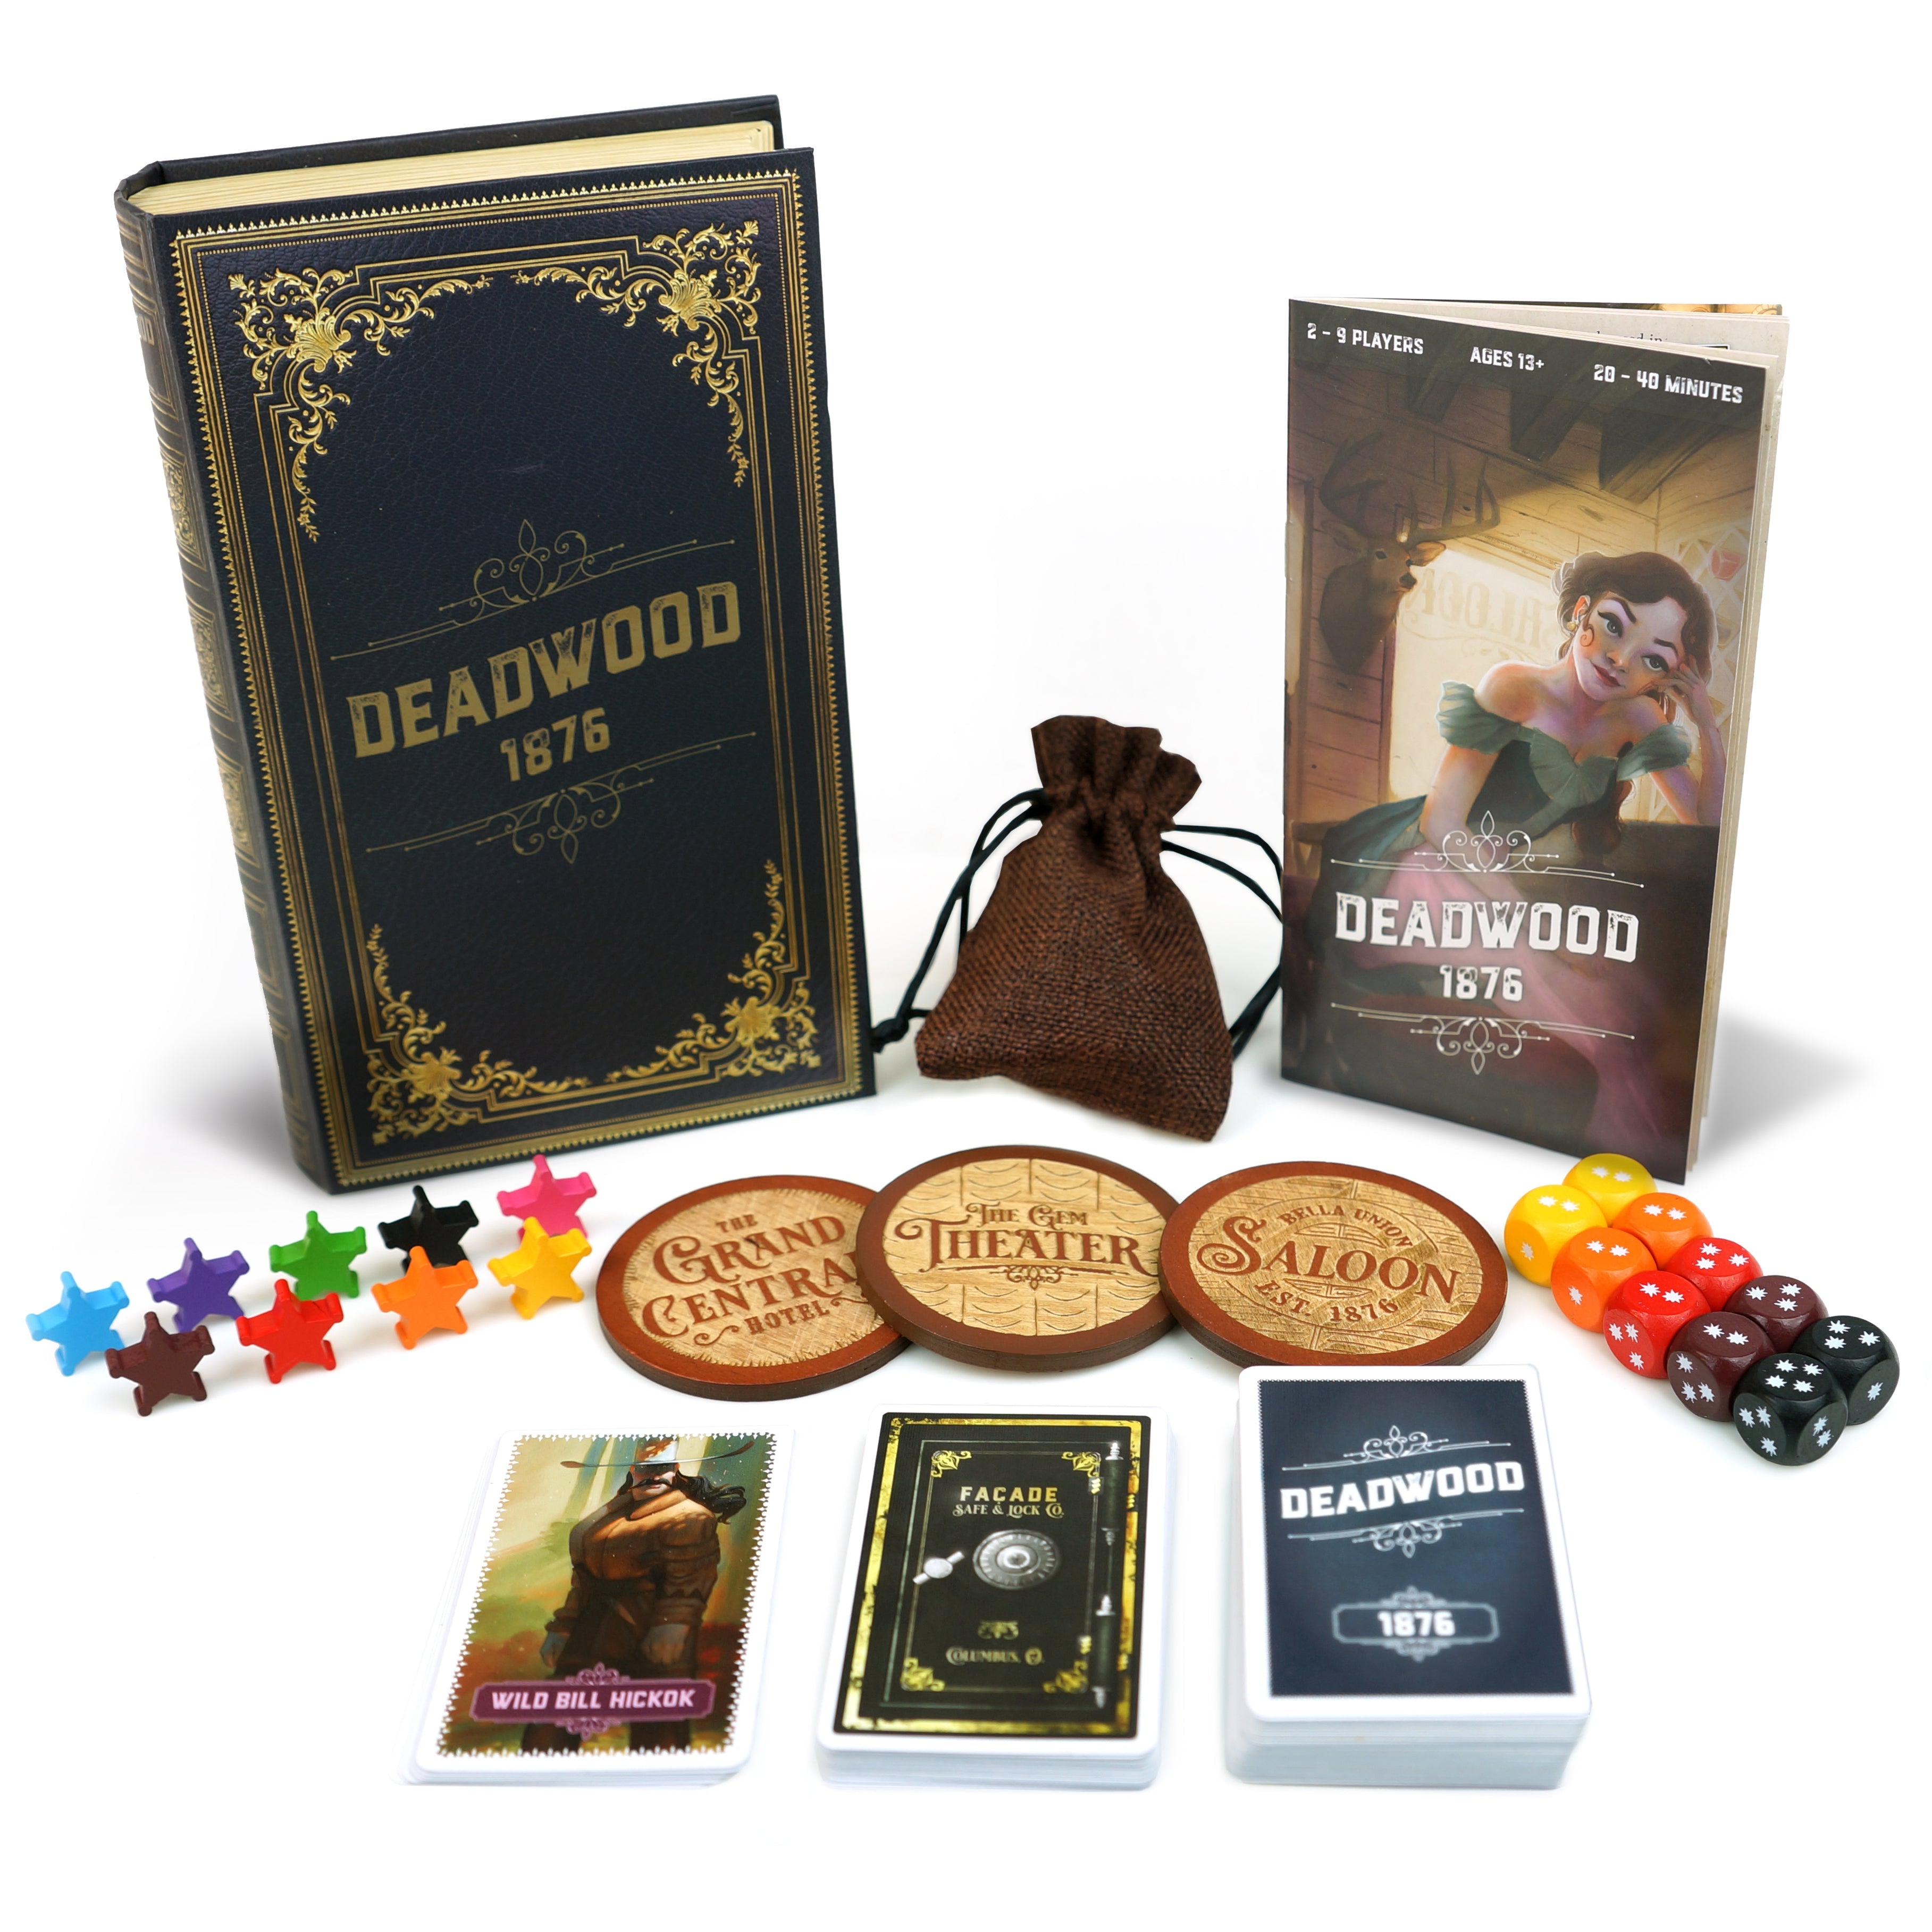 Deadwood 1876 - Bards & Cards